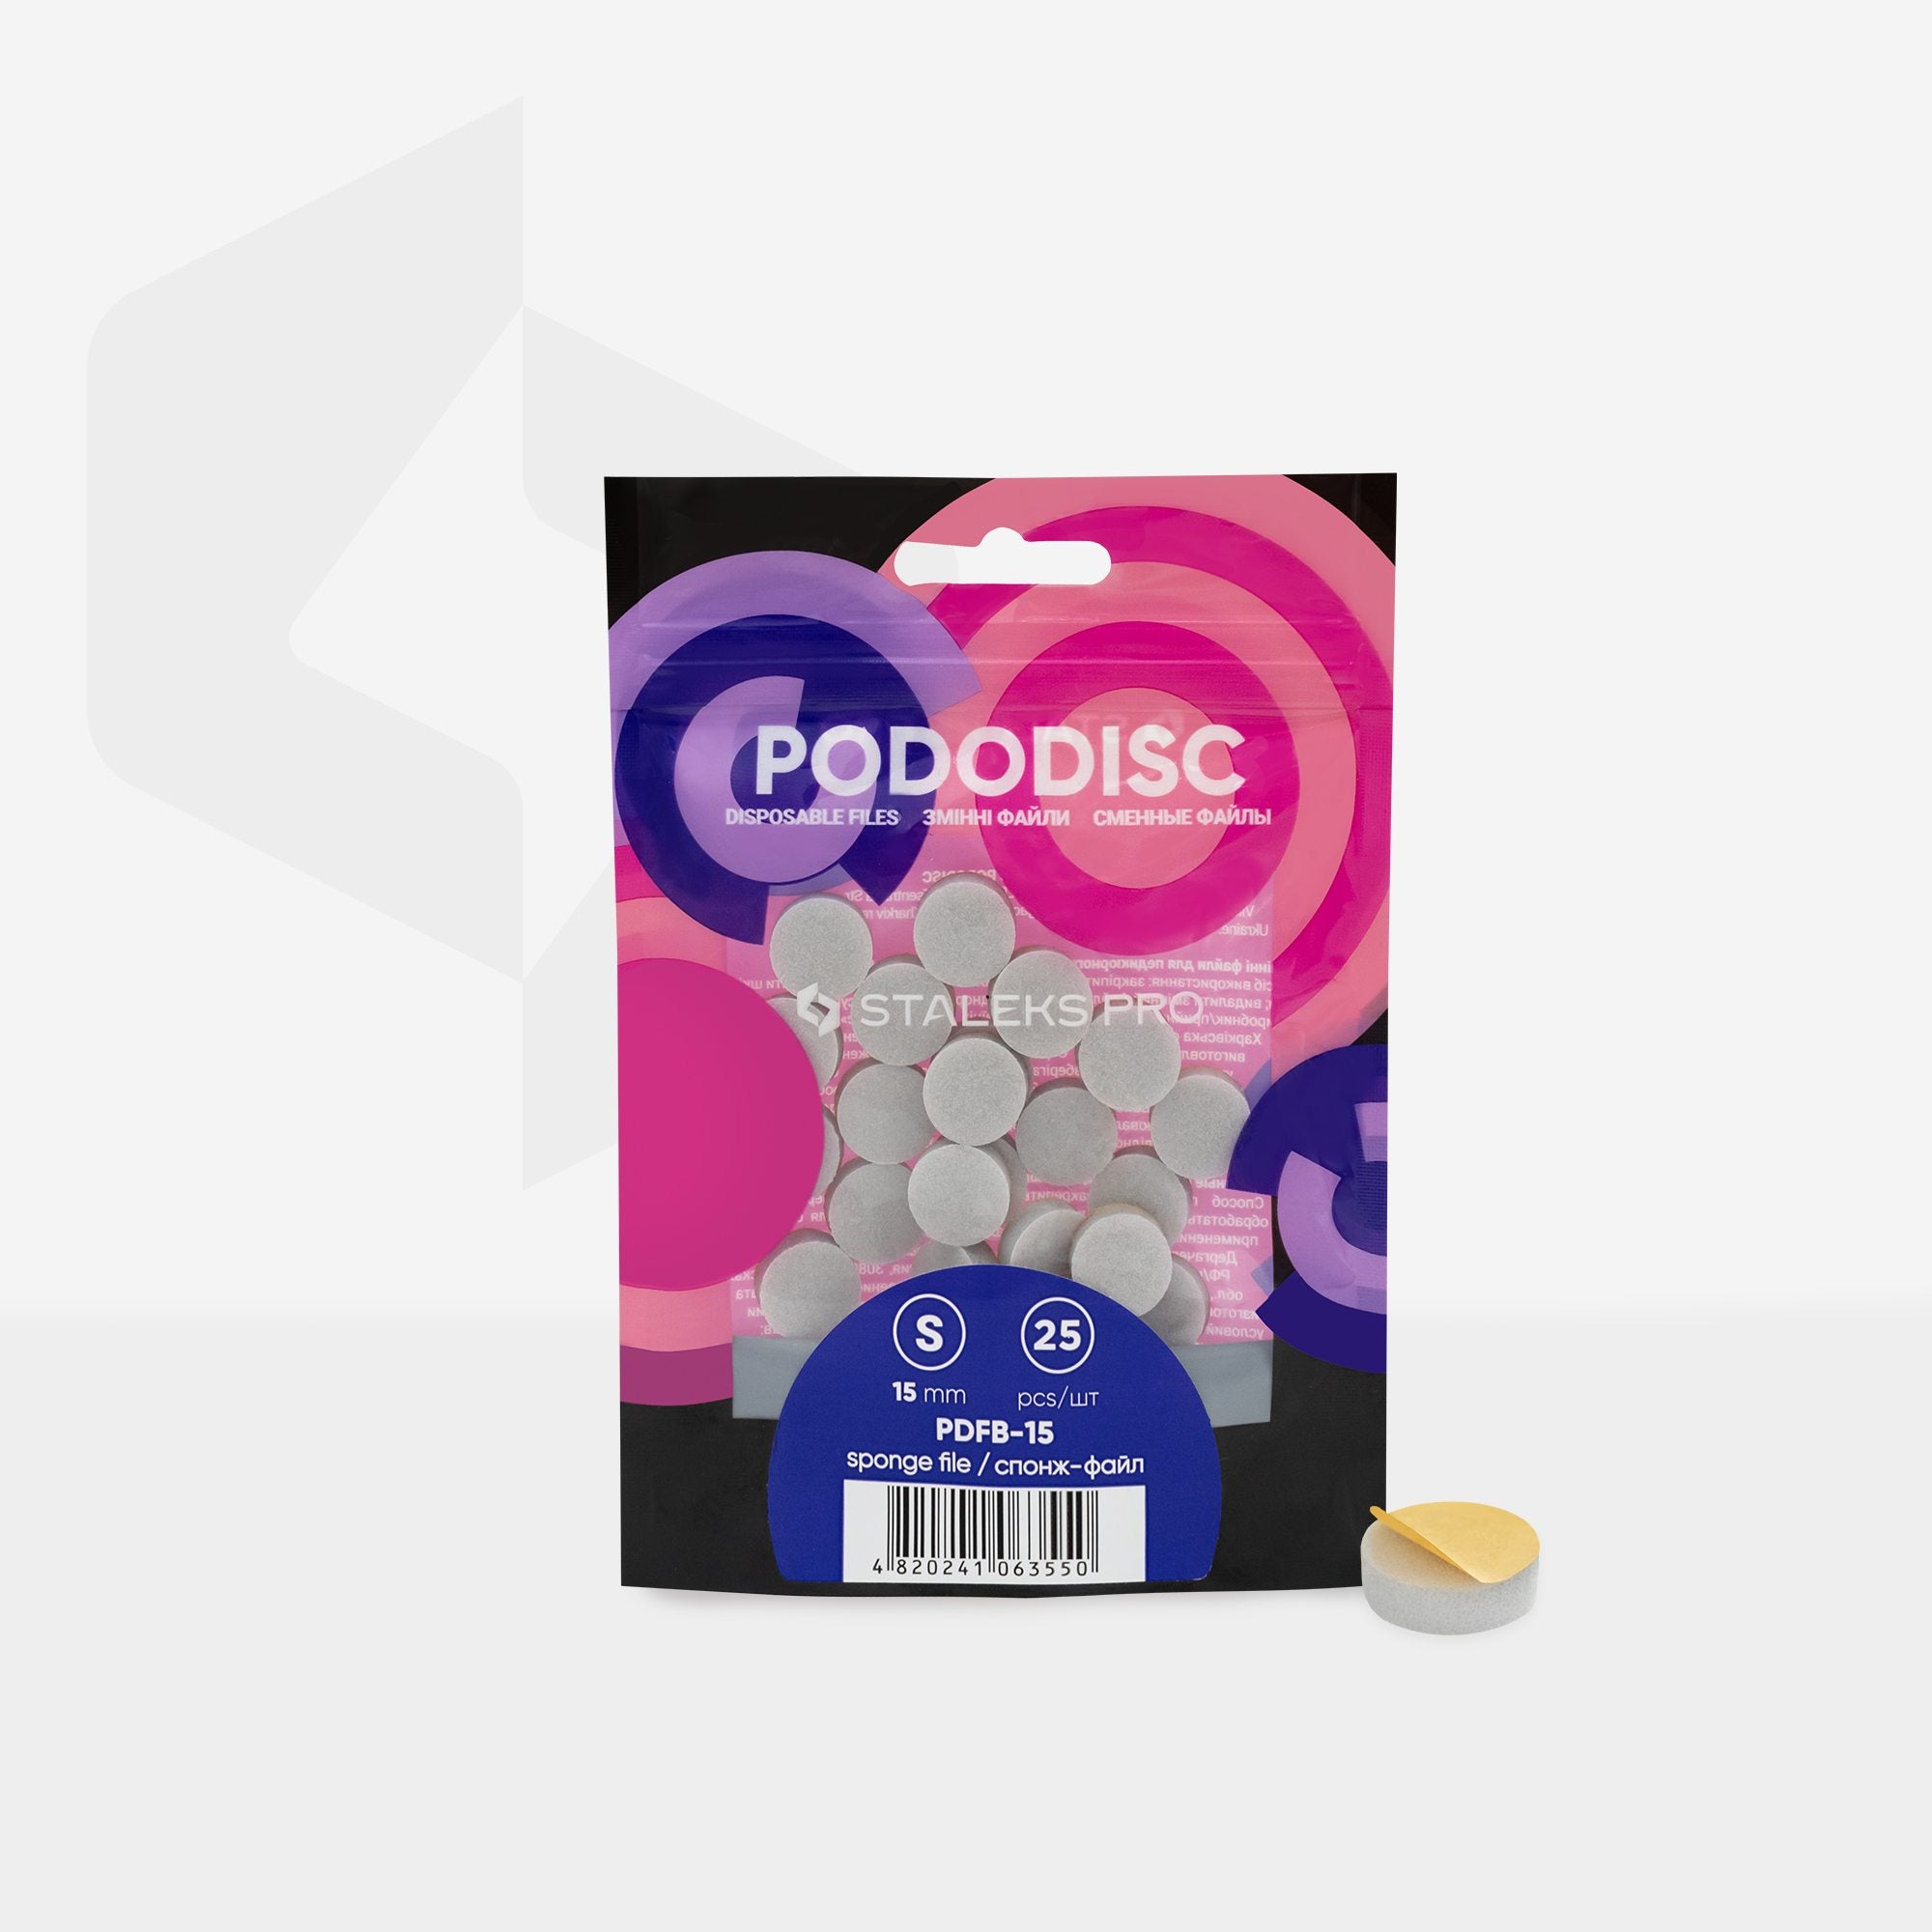 Limas-esponjas desechables para el disco de pedicura PODODISC STALEKS PRO S (25 uds.)